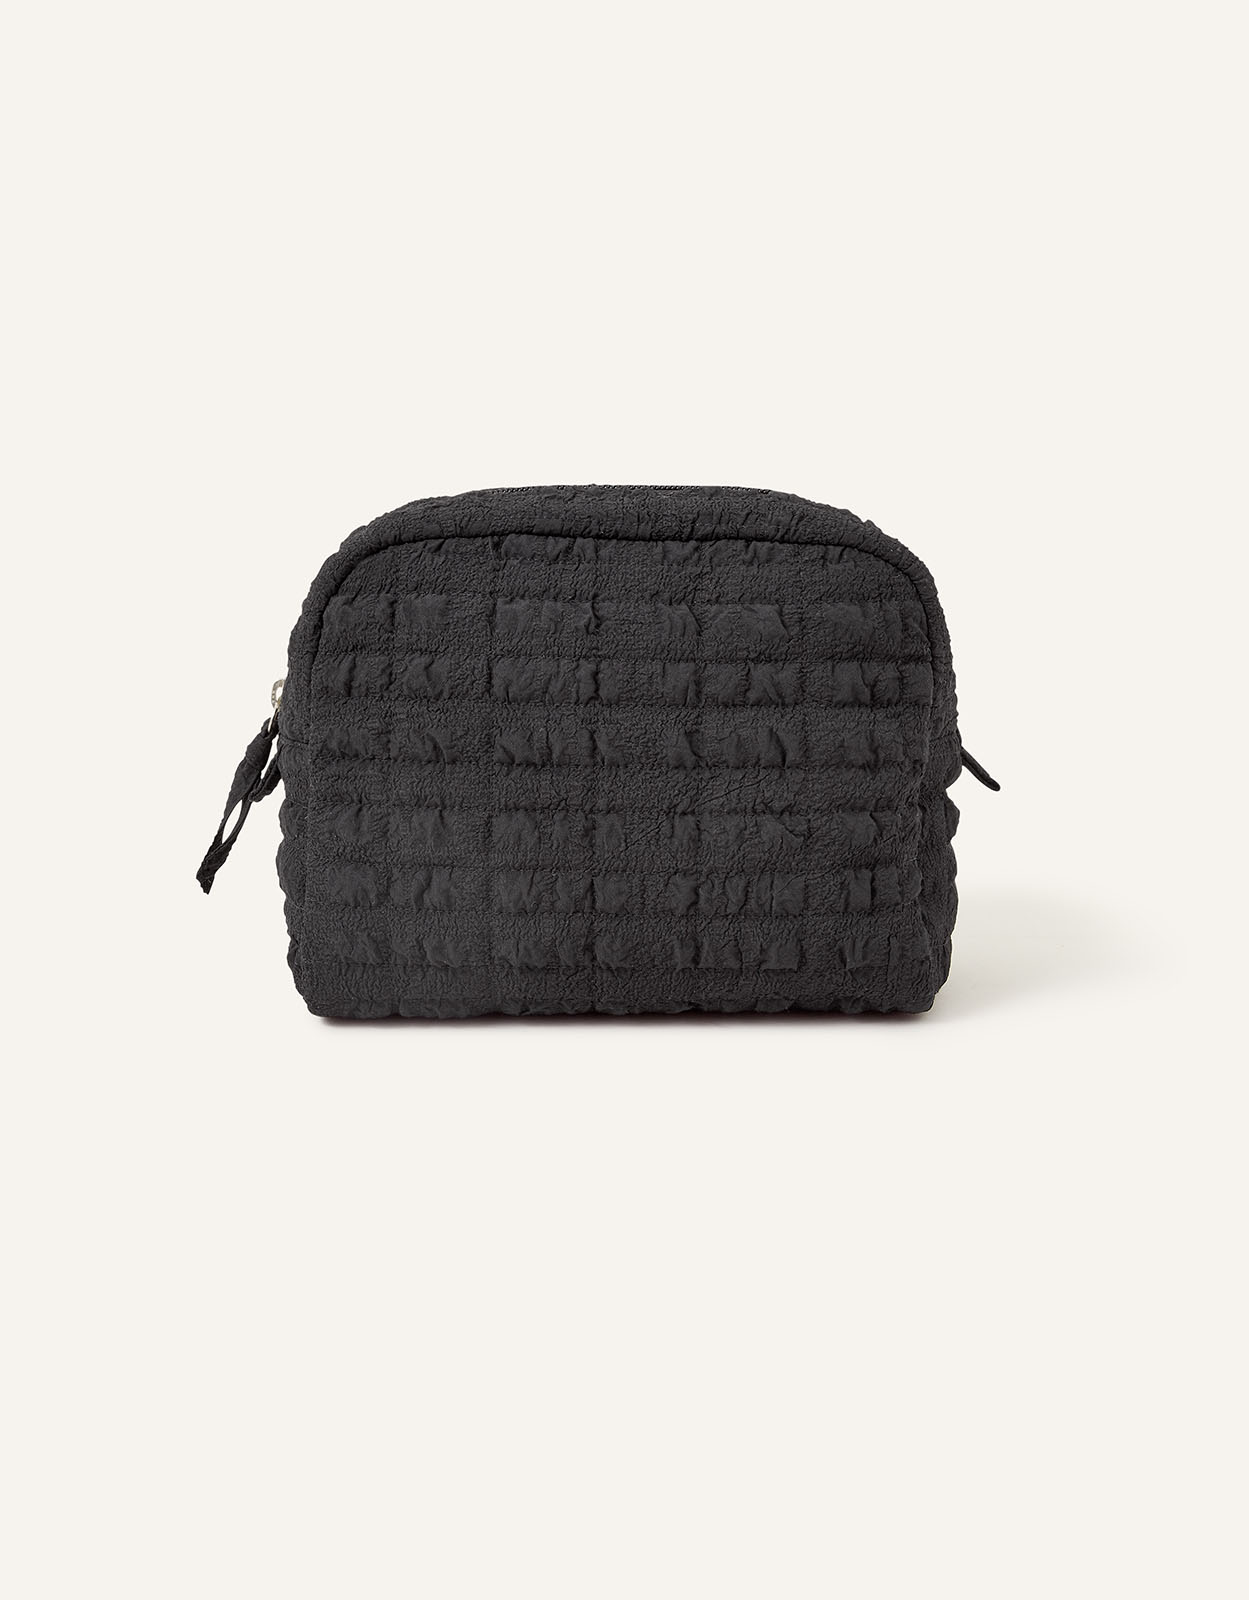 Accessorize Women's Black Textured Seersucker Make Up Bag, Size: 16x22cm